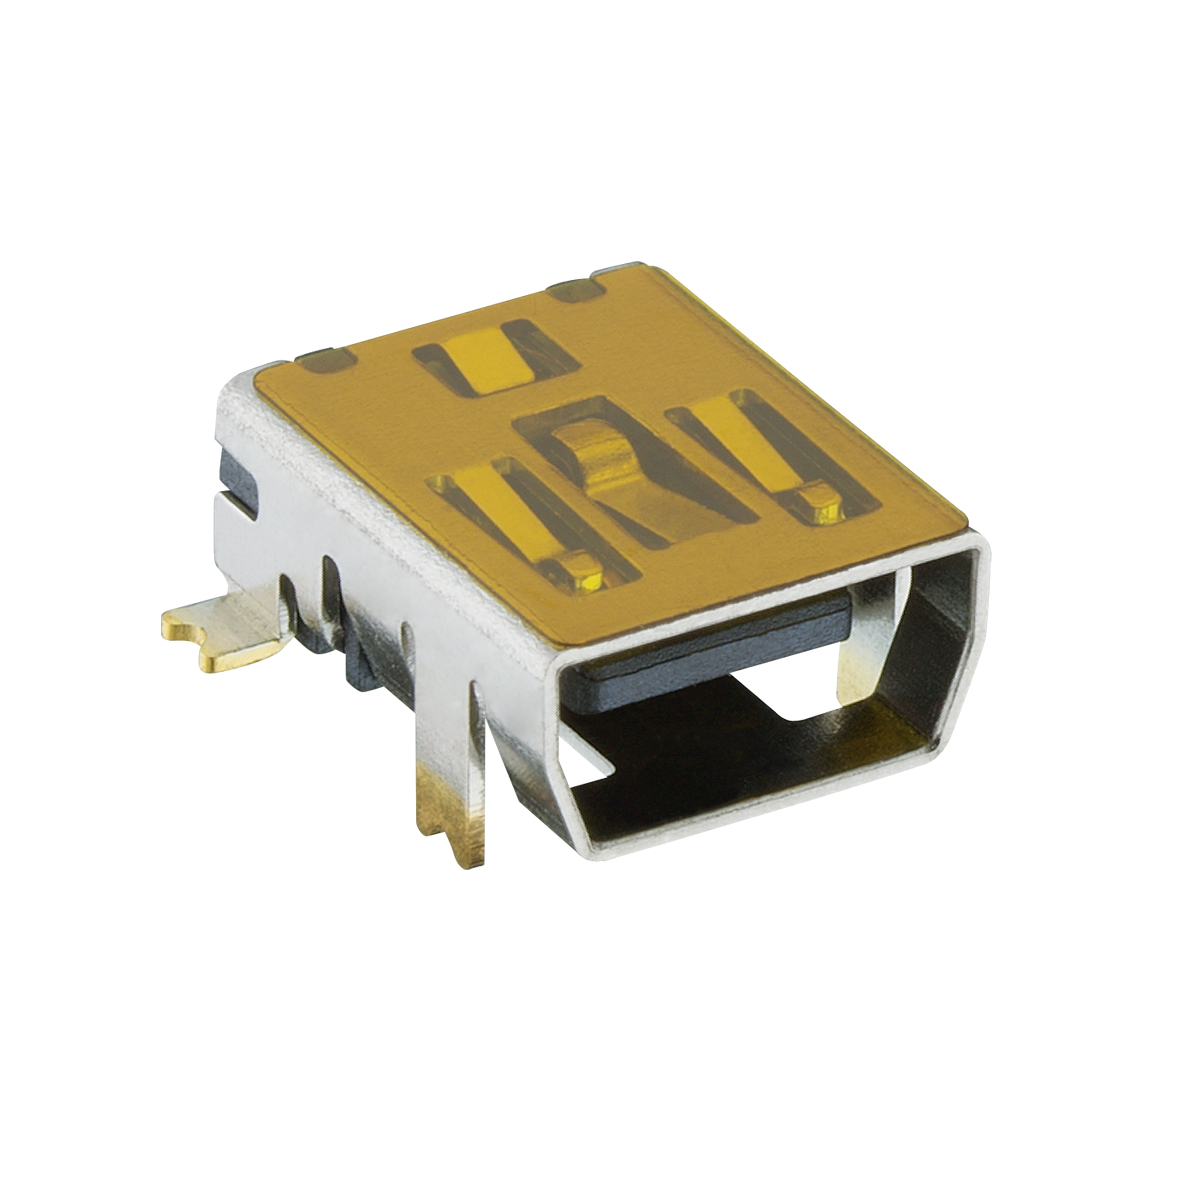 Lumberg: 2486 02 (Series 24 | USB and IEEE 1394 connectors)